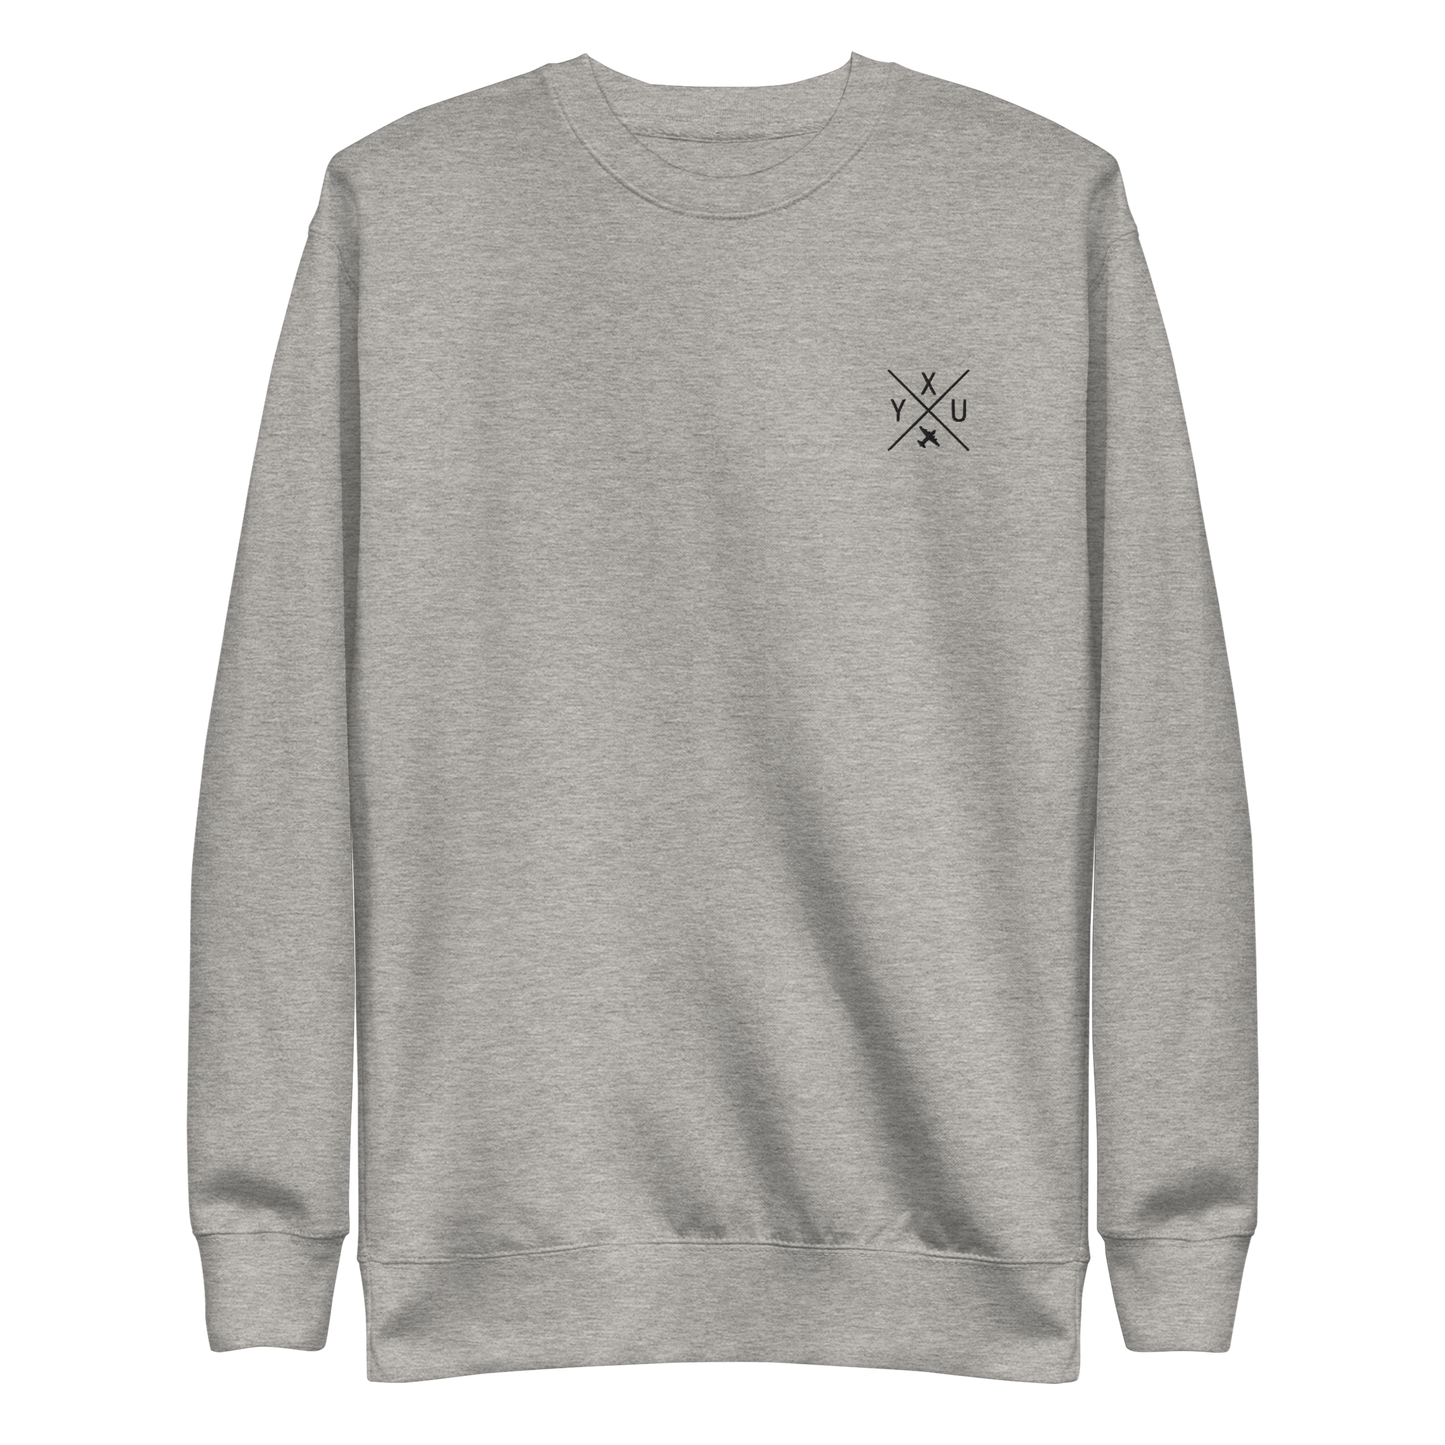 YHM Designs - YXU London Premium Sweatshirt - Crossed-X Design with Airport Code and Vintage Propliner - Black Embroidery - Image 02